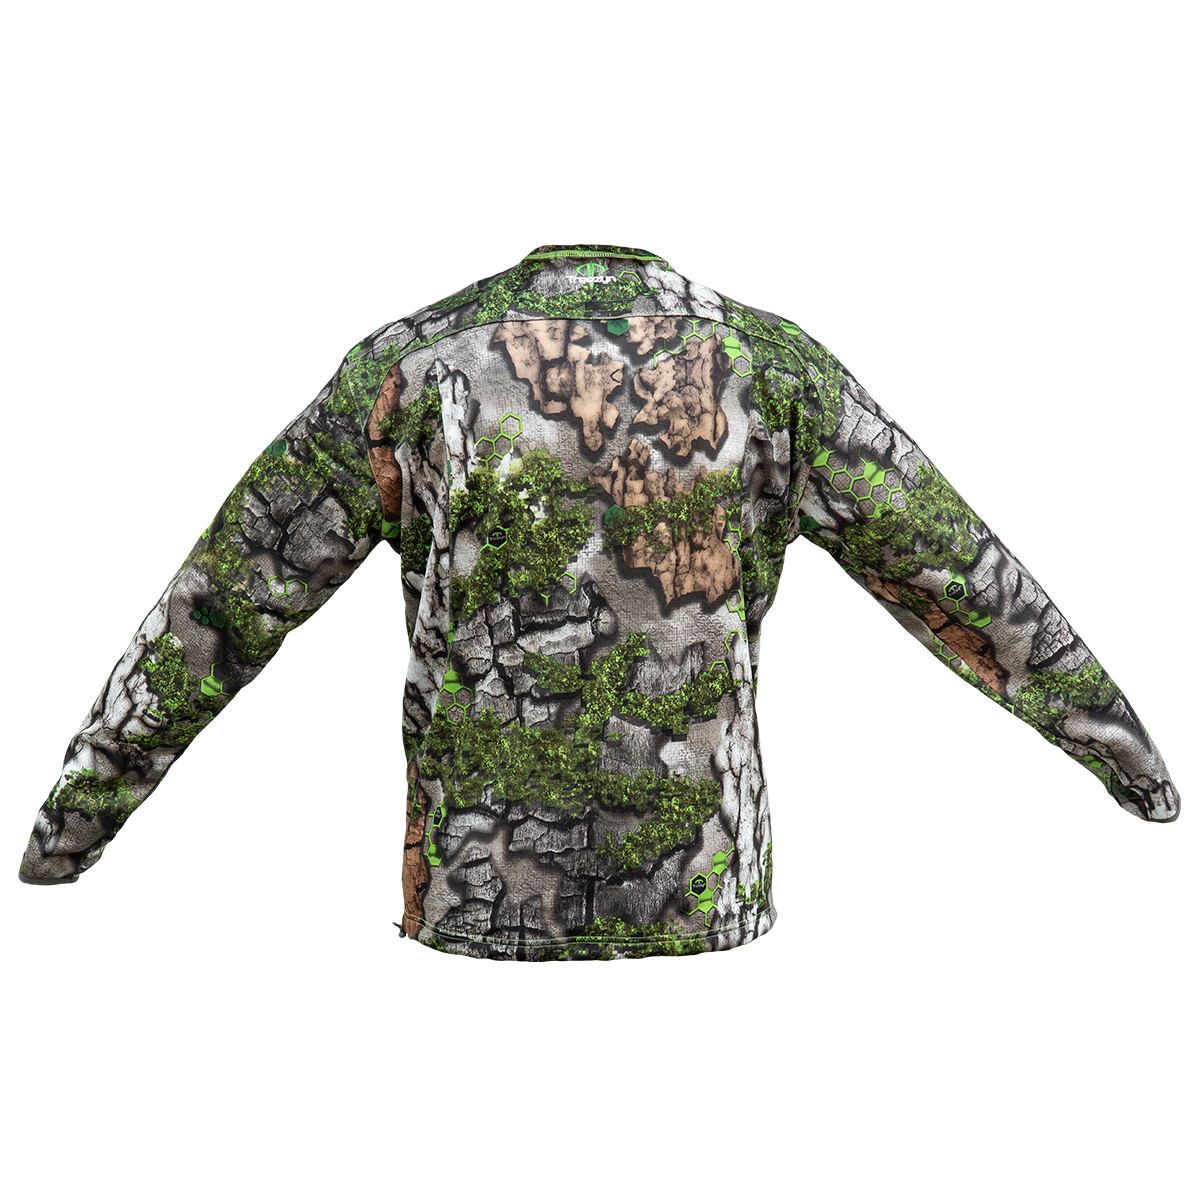 Treezyn Camo: Professional Hunting Clothes, Gear, & Apparel